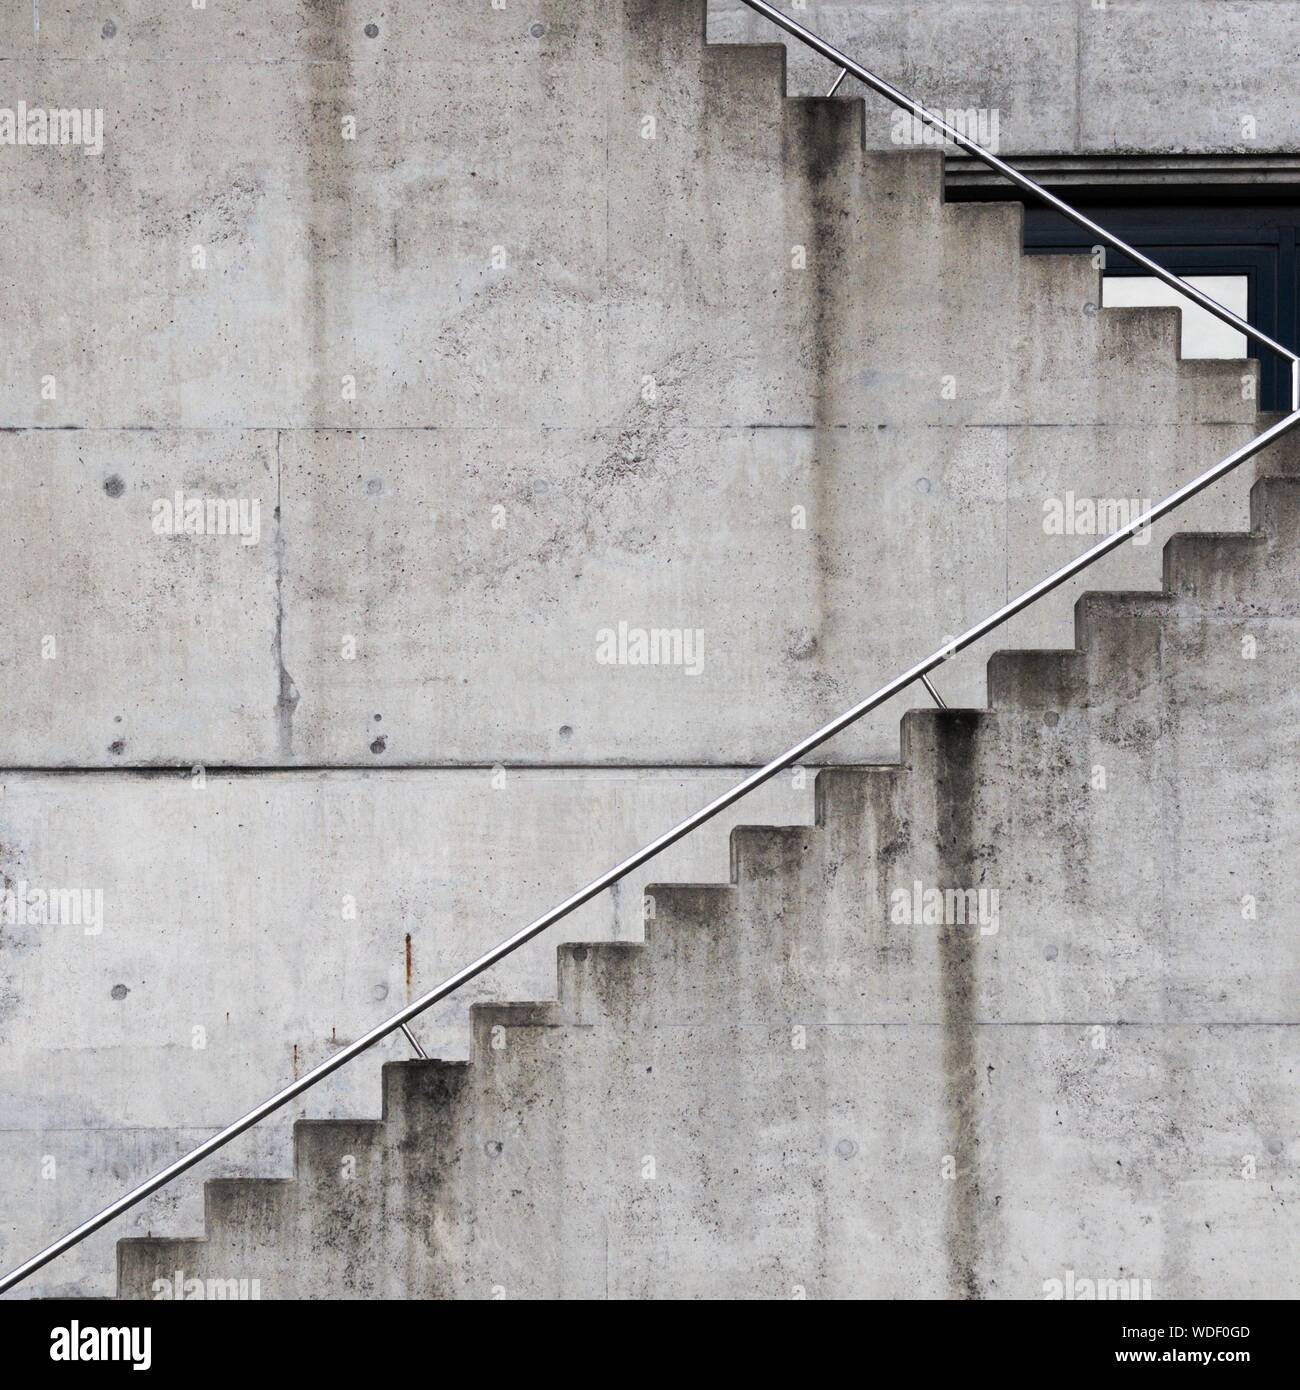 Escaleras de cemento exterior Fotografía de stock - Alamy